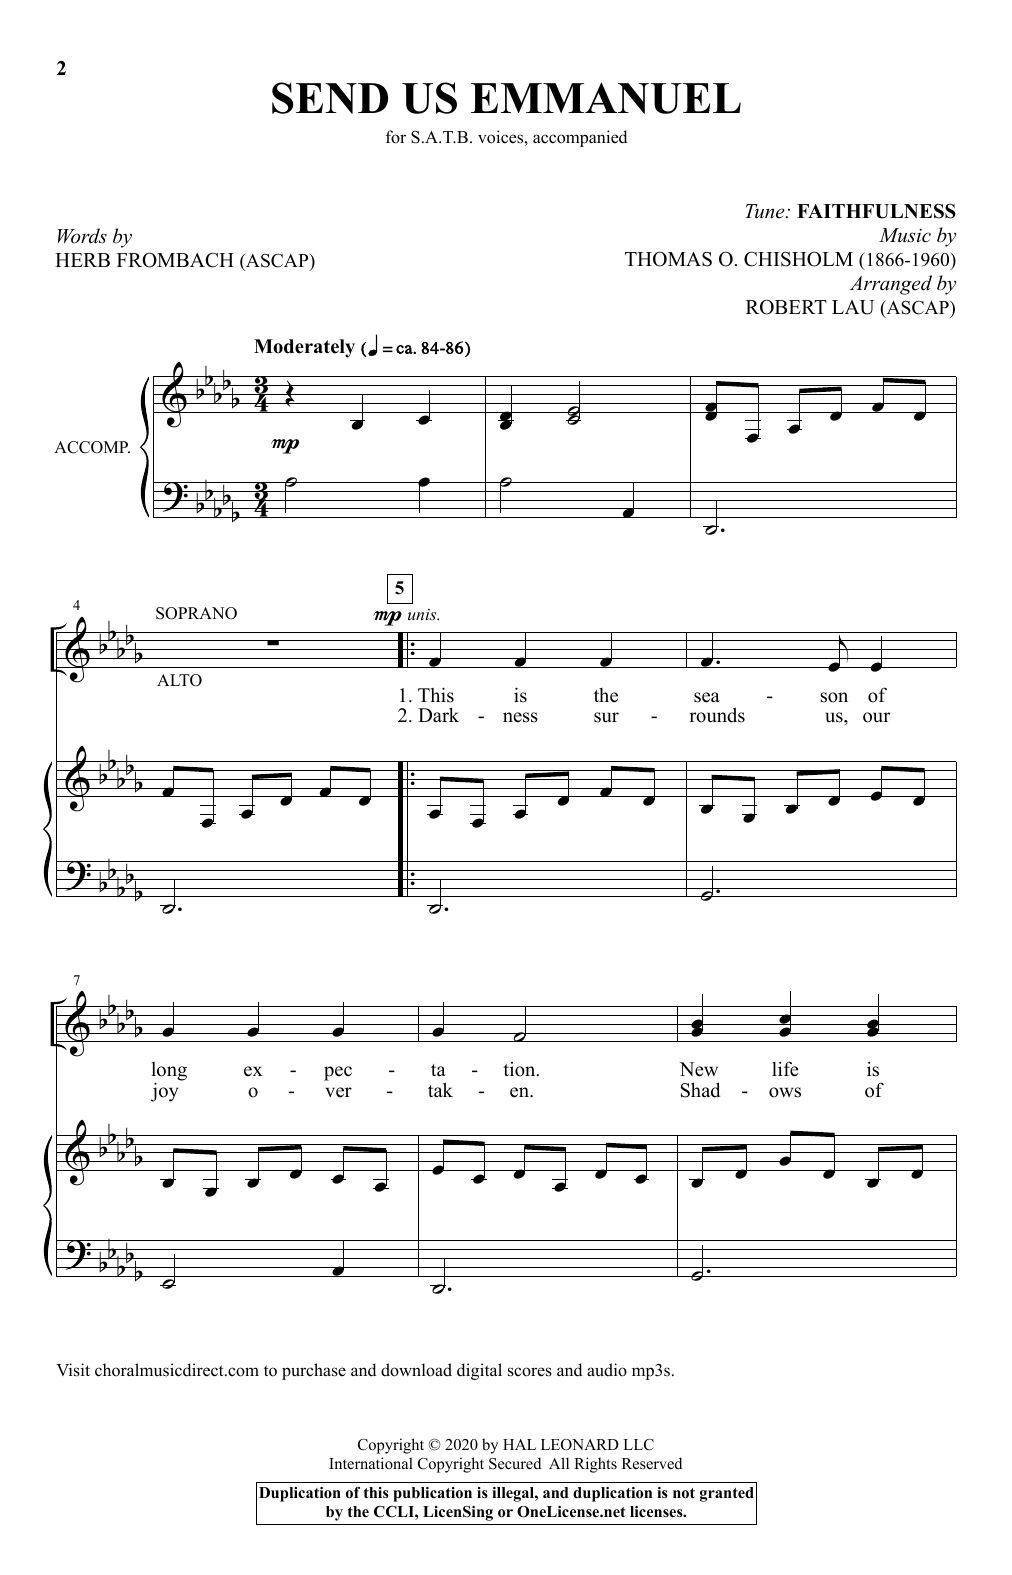 Thomas O. Chisholm Send Us Emmanuel (arr. Robert Lau) Sheet Music Notes & Chords for SATB Choir - Download or Print PDF